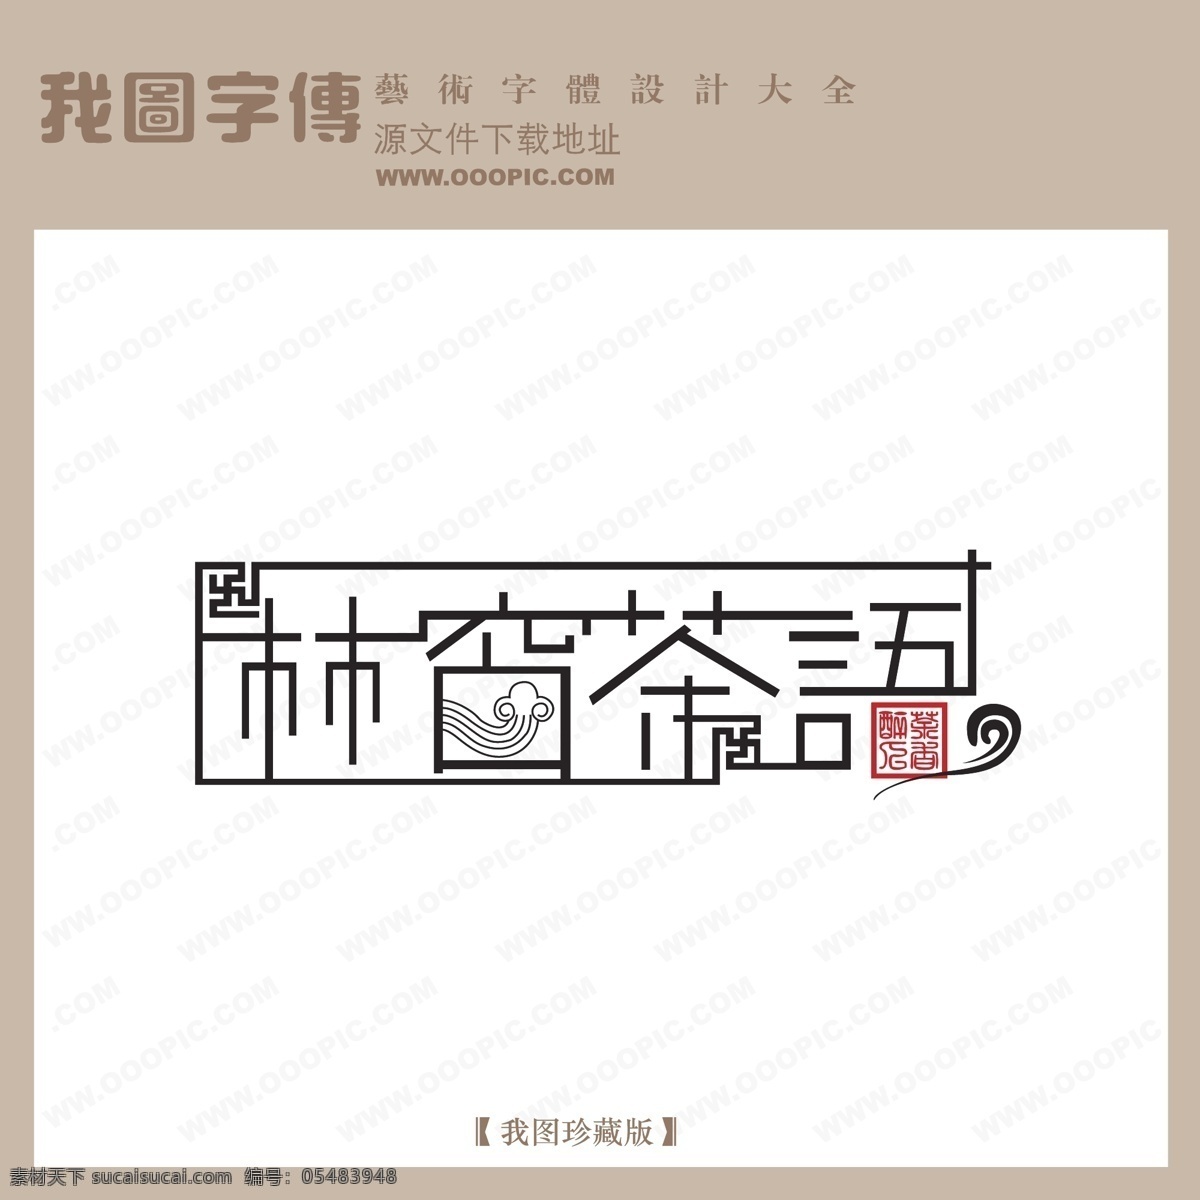 logo 艺术 字 创意艺术字 艺术字 艺术字设计 中文 现代艺术 字体 设计艺术 林窗茶语 矢量图